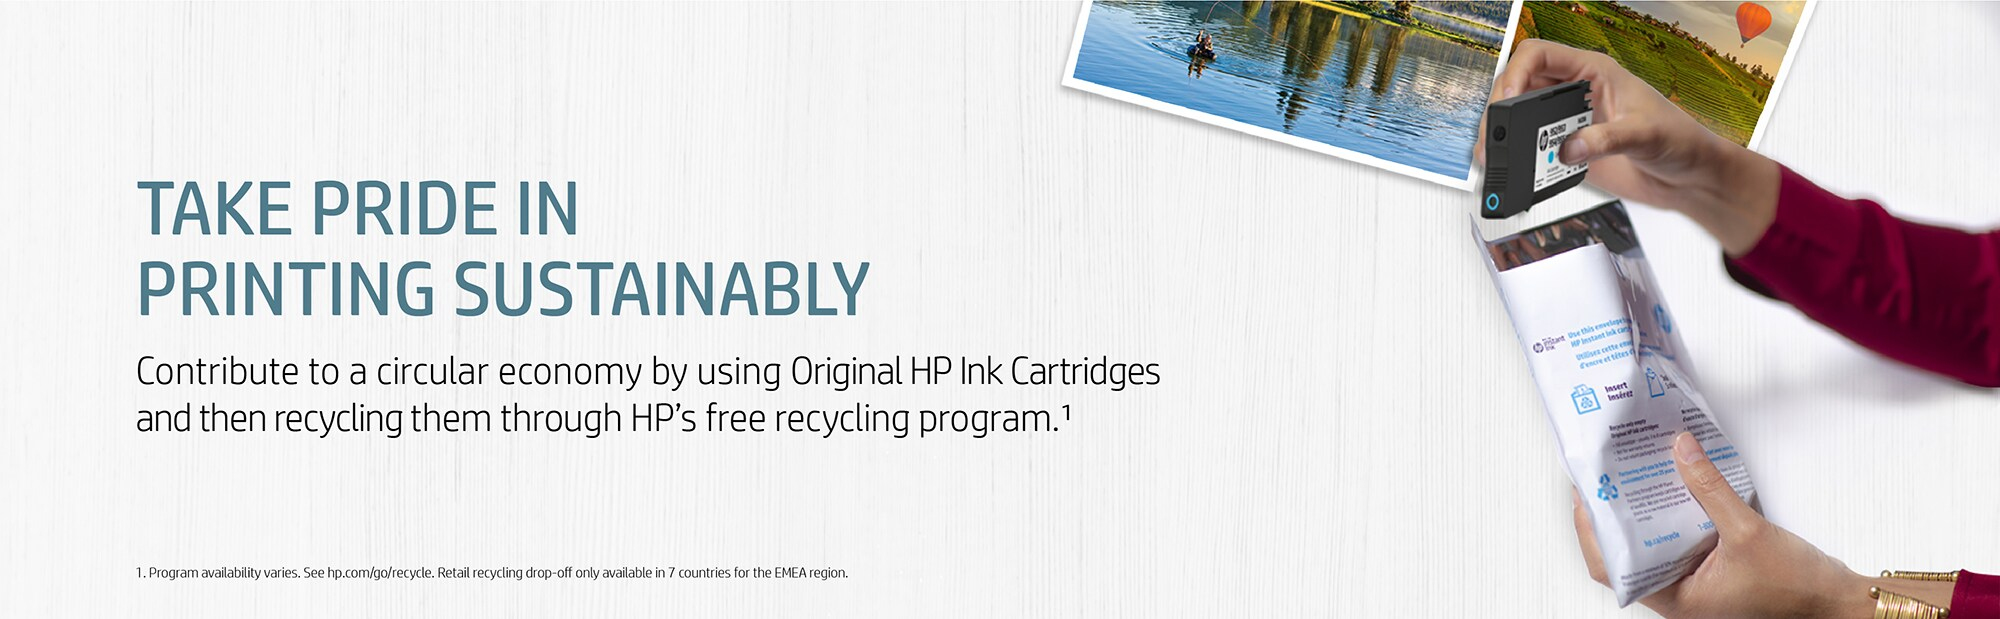 HP 953 Ink Cartridge Multipack CMYK 6ZC69AE